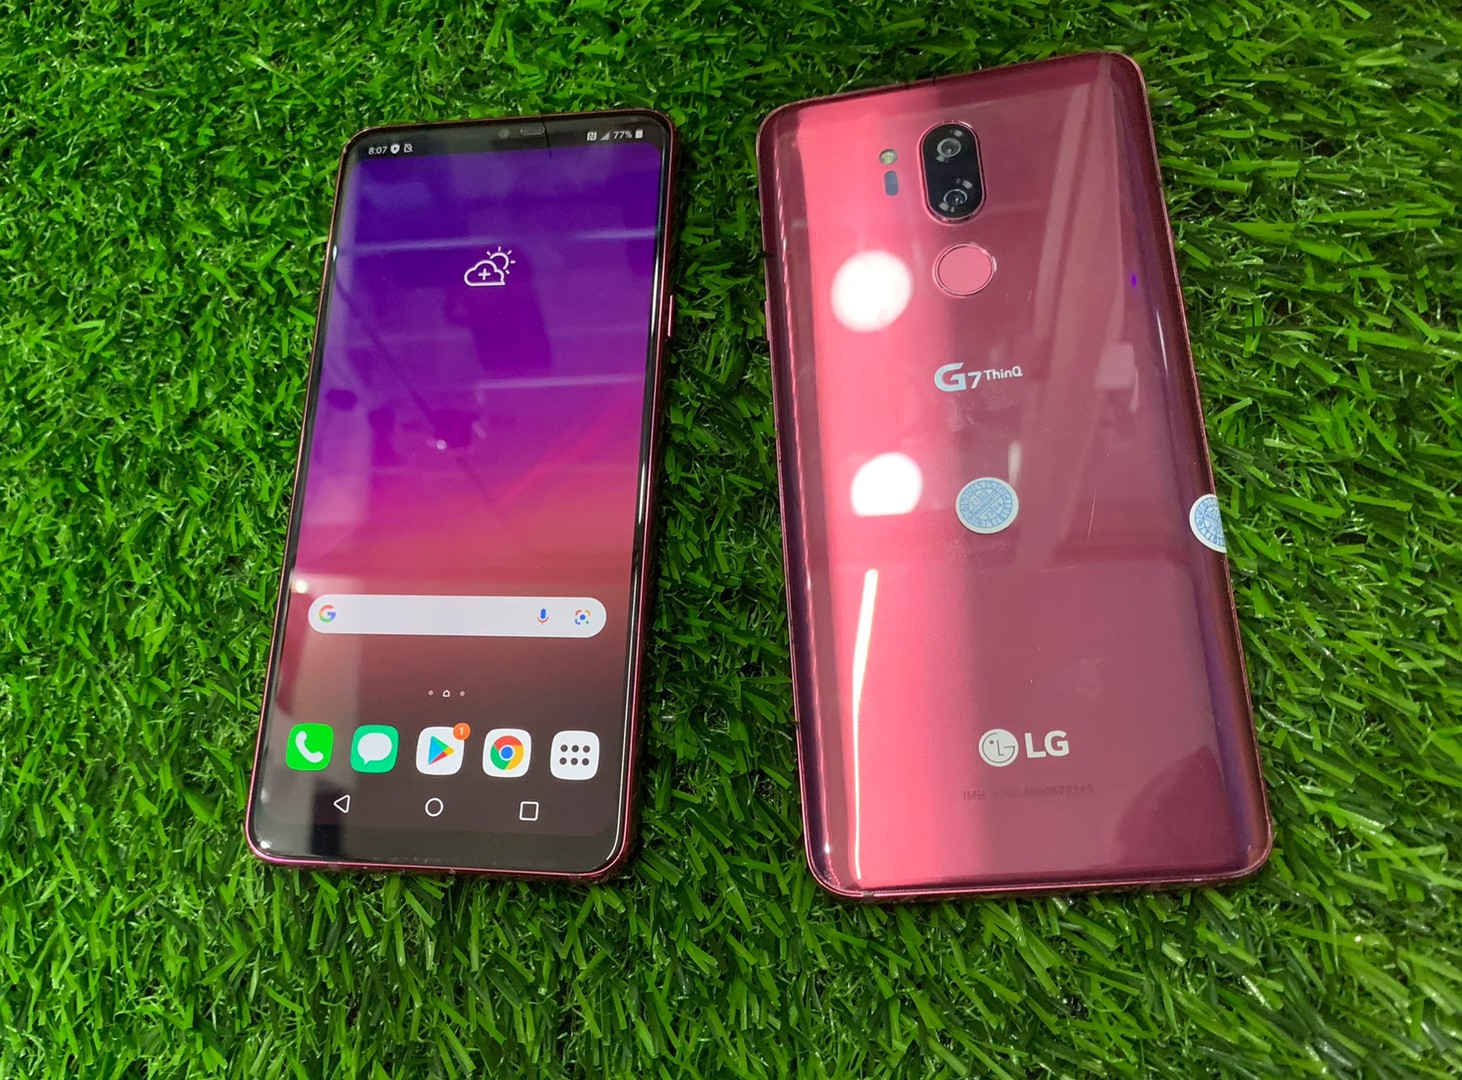 celulares y tabletas - LG G7 TUINQ 64GB